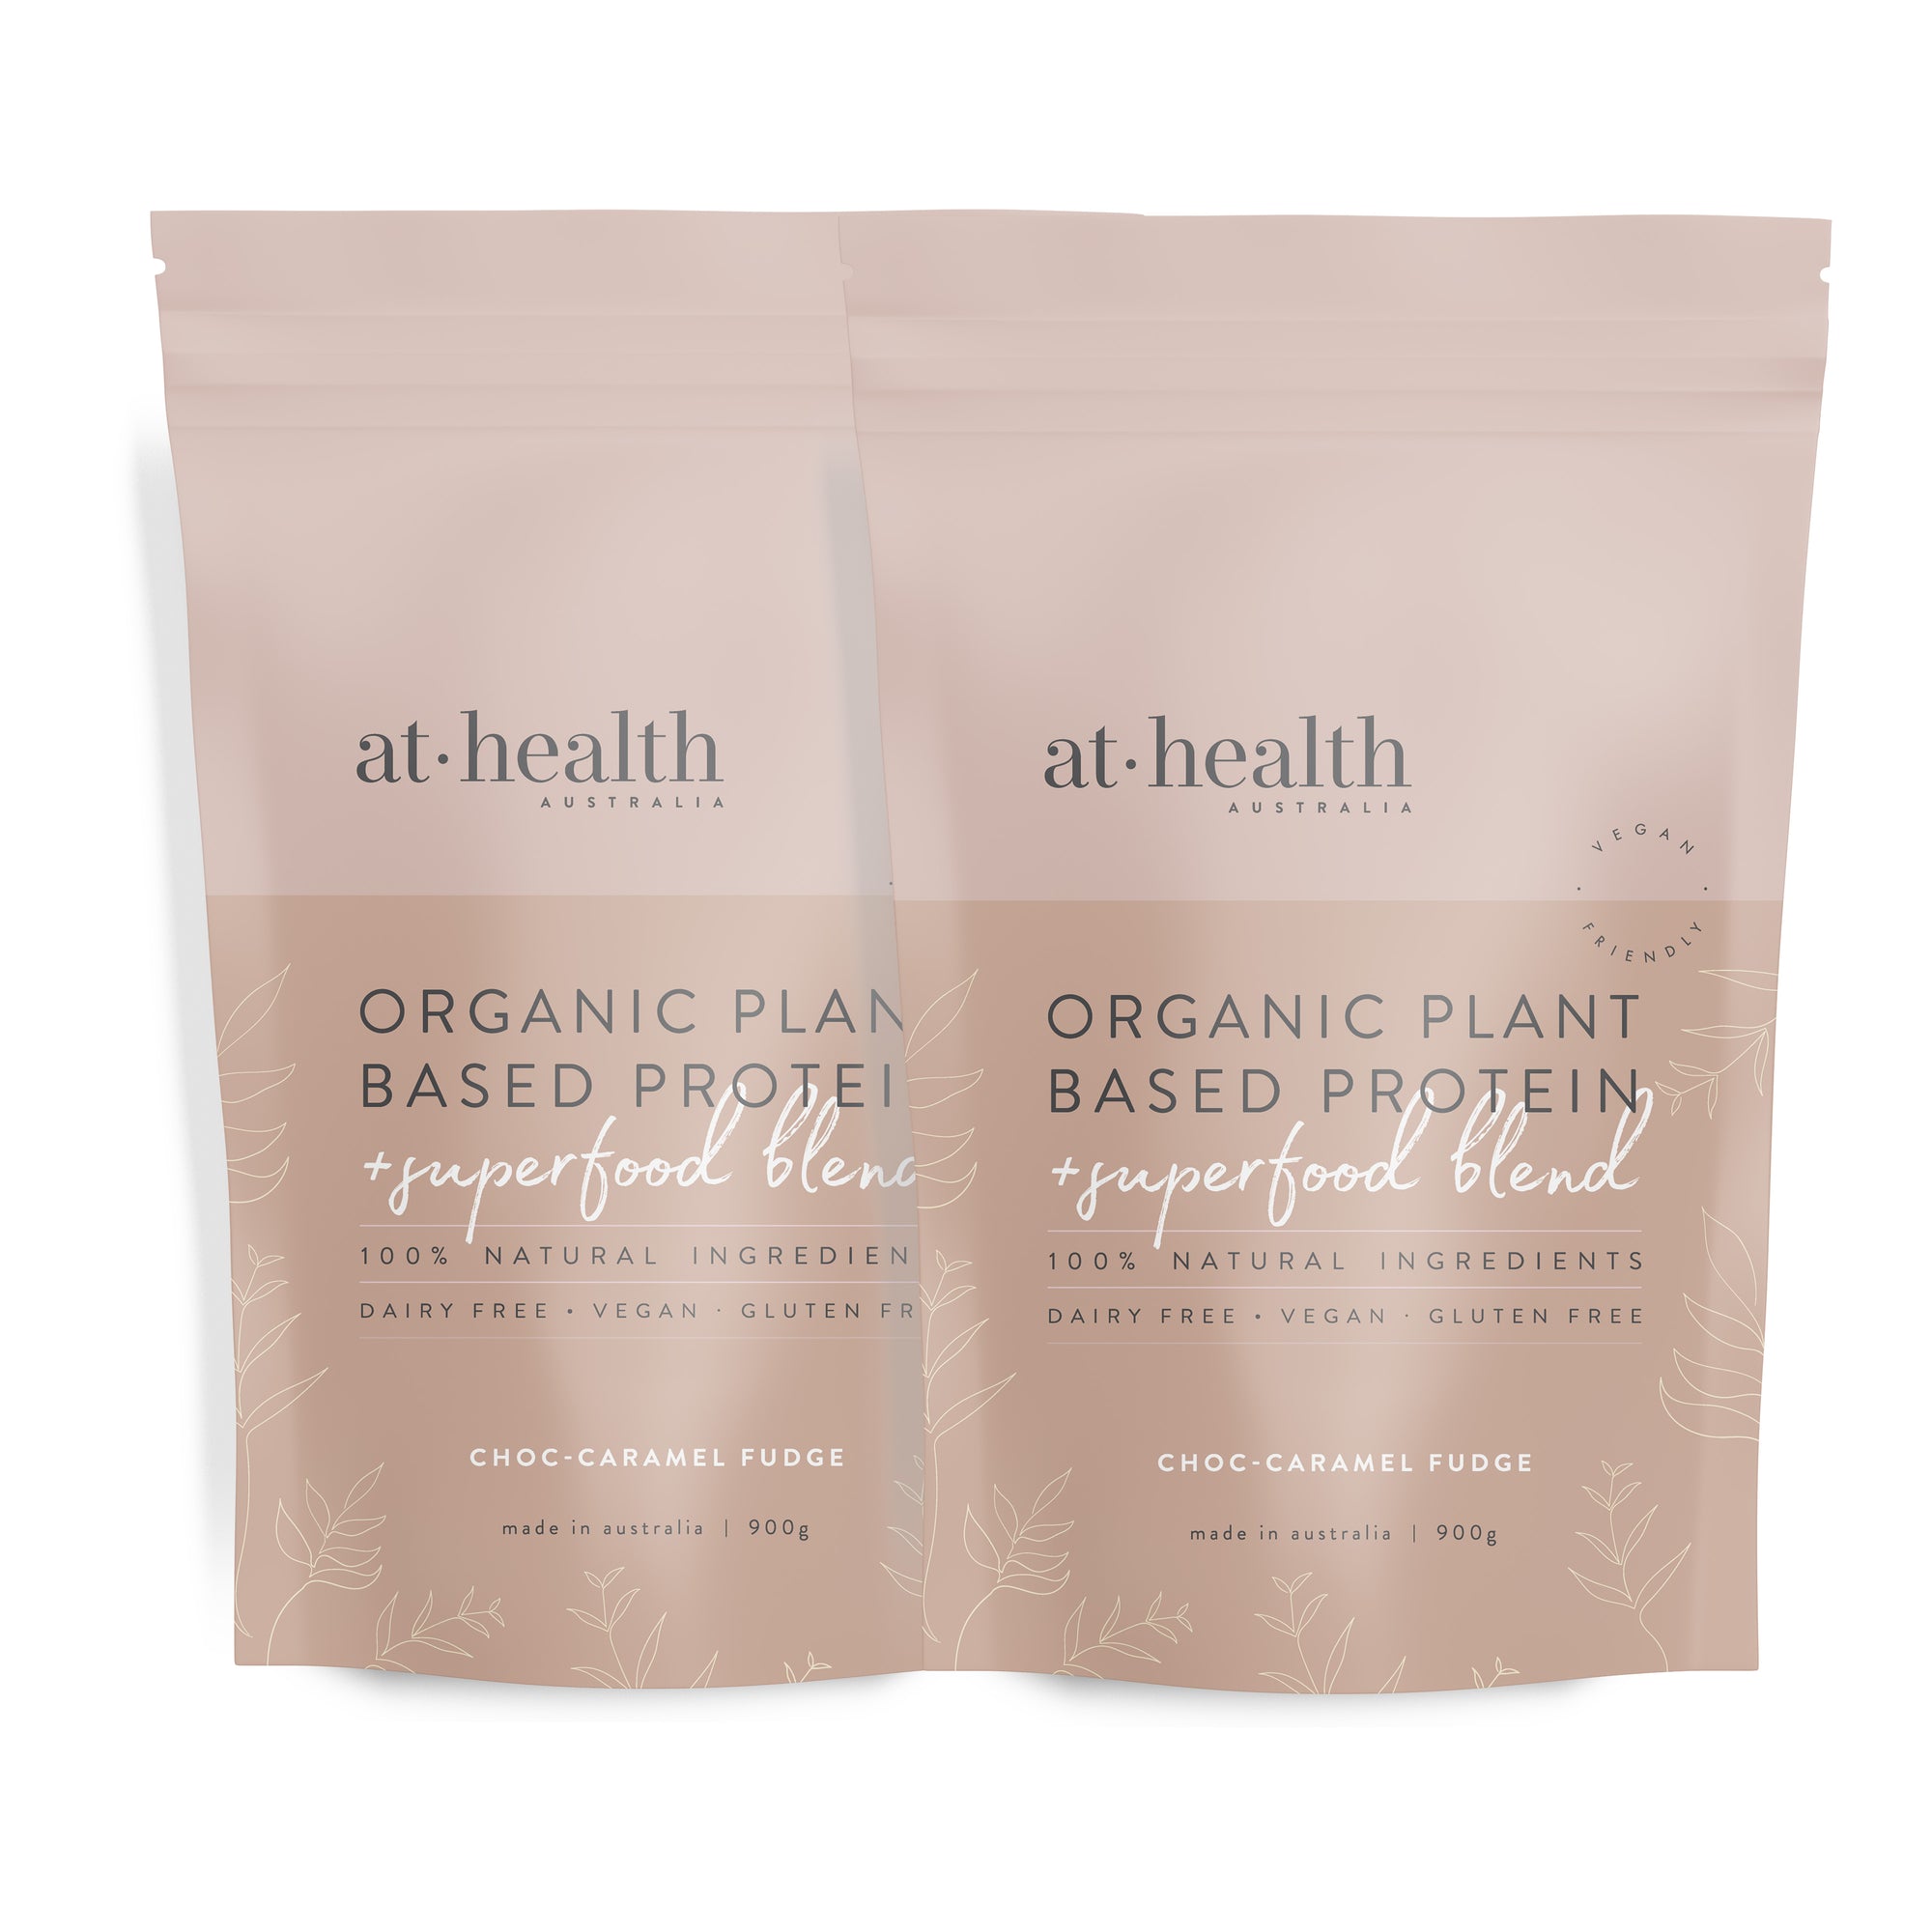 Vegan Organic Plant Based Protein Powder - Choc-Caramel Fudge